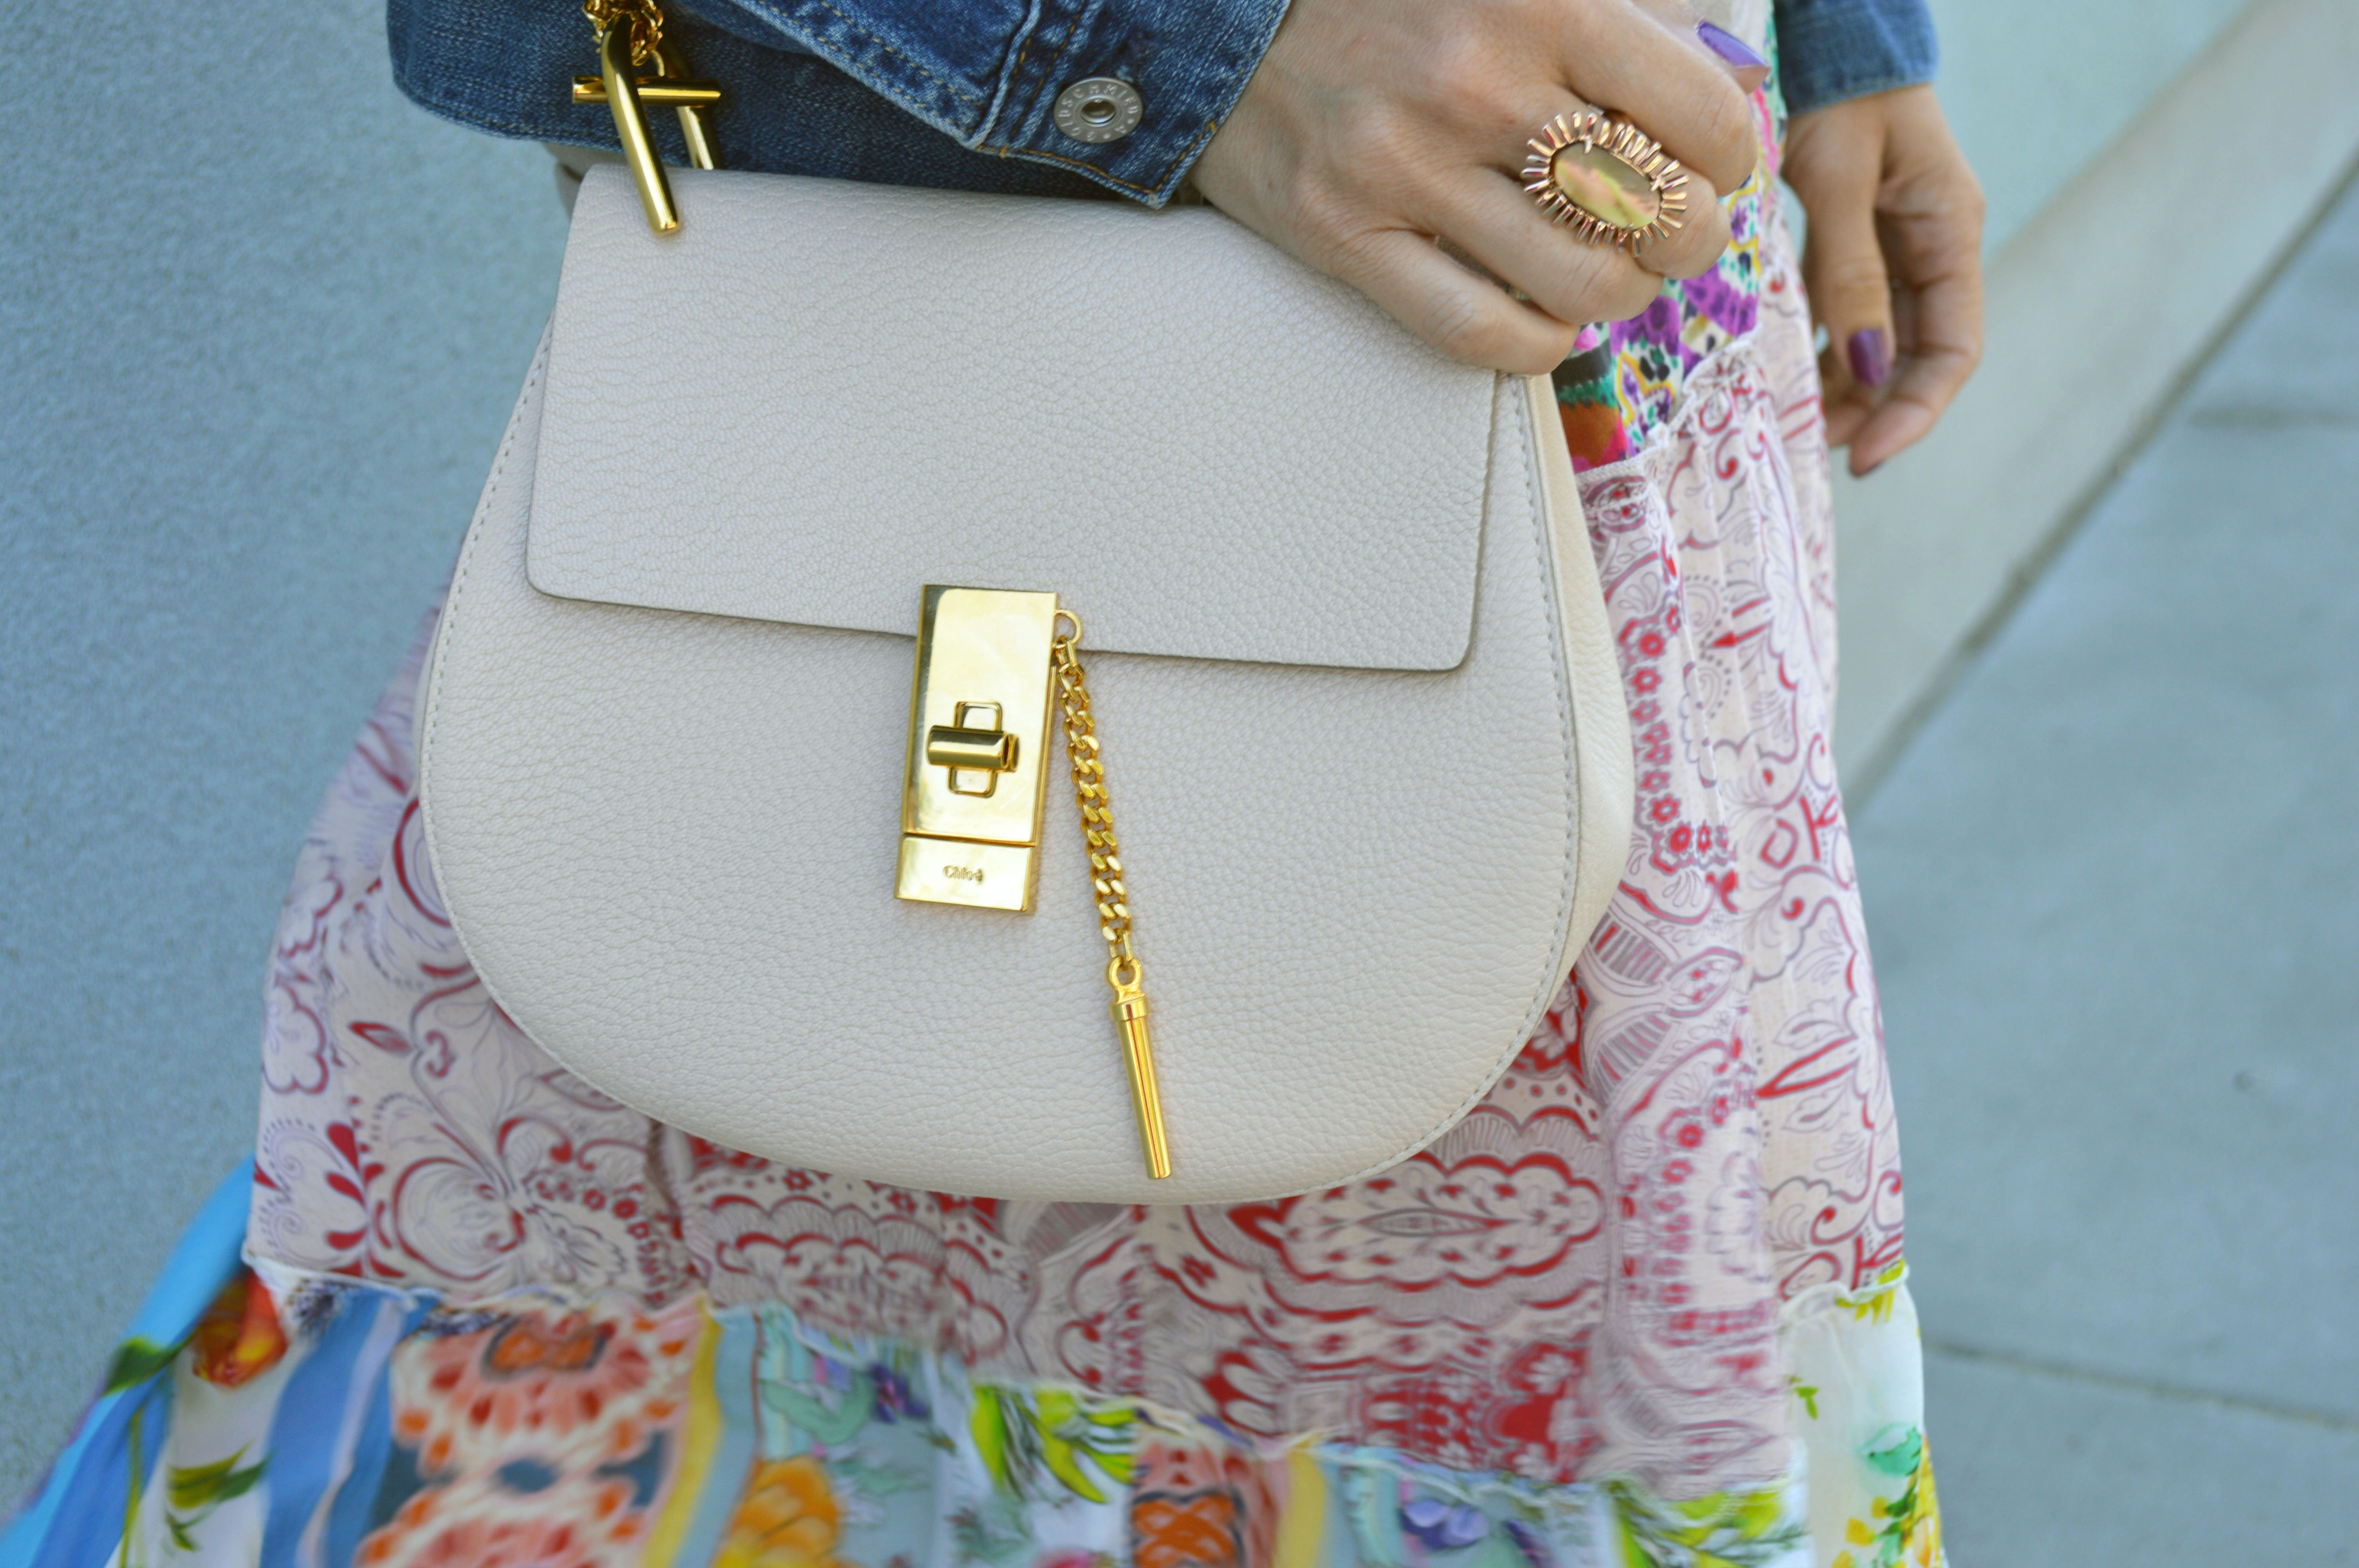 Chloe Drew small handbag review | Bay Area Fashionista